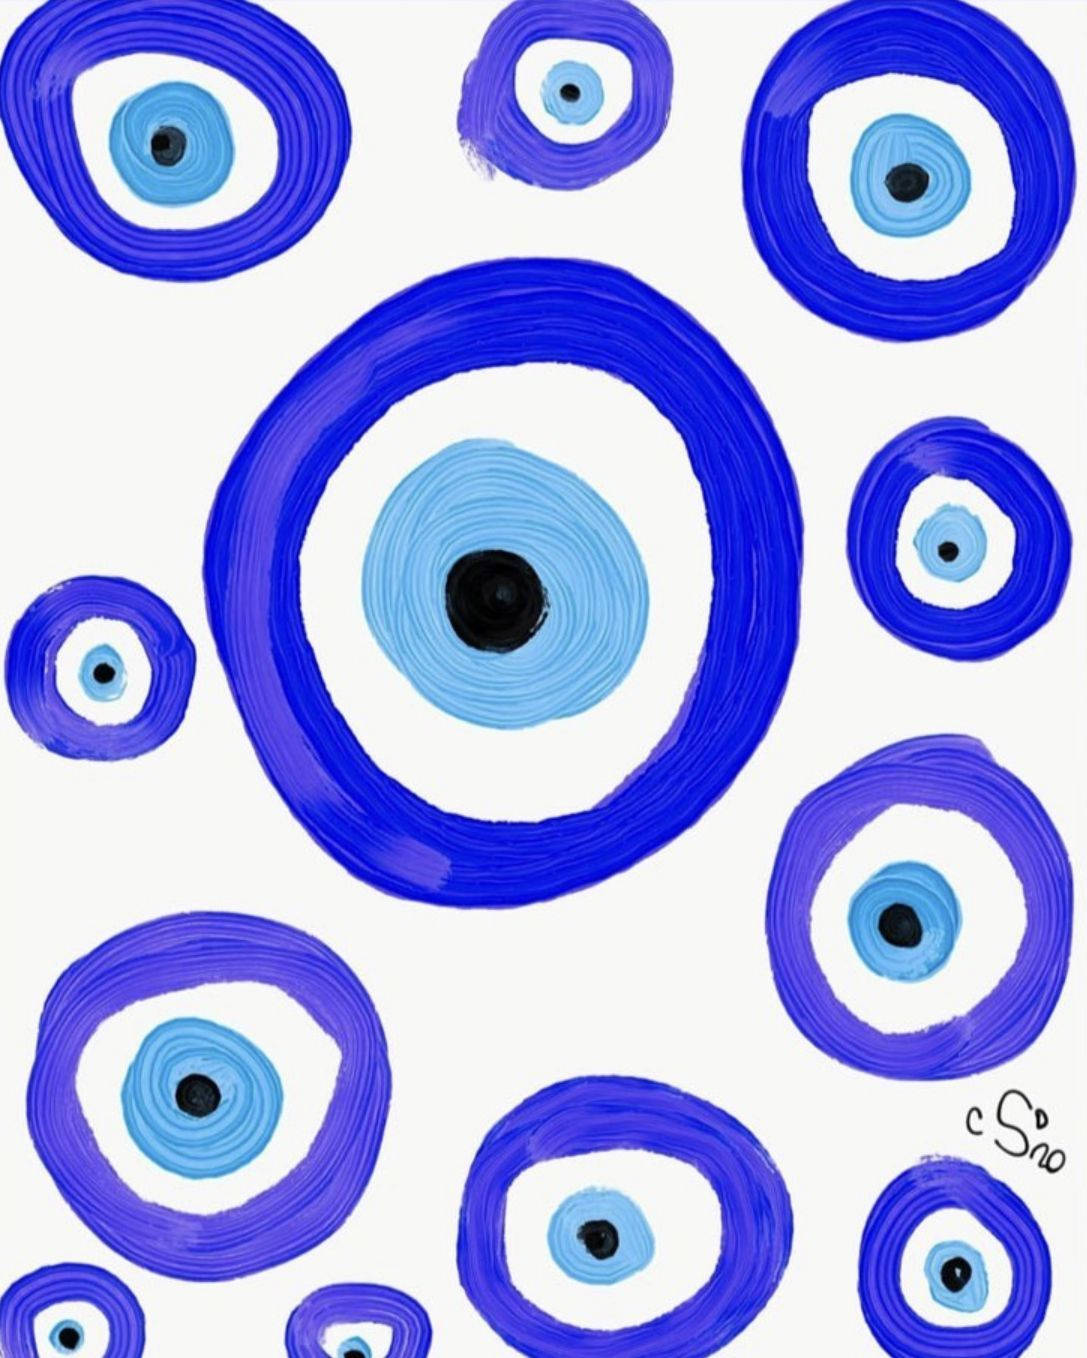 Evil Eye Paint Pattern Wallpaper